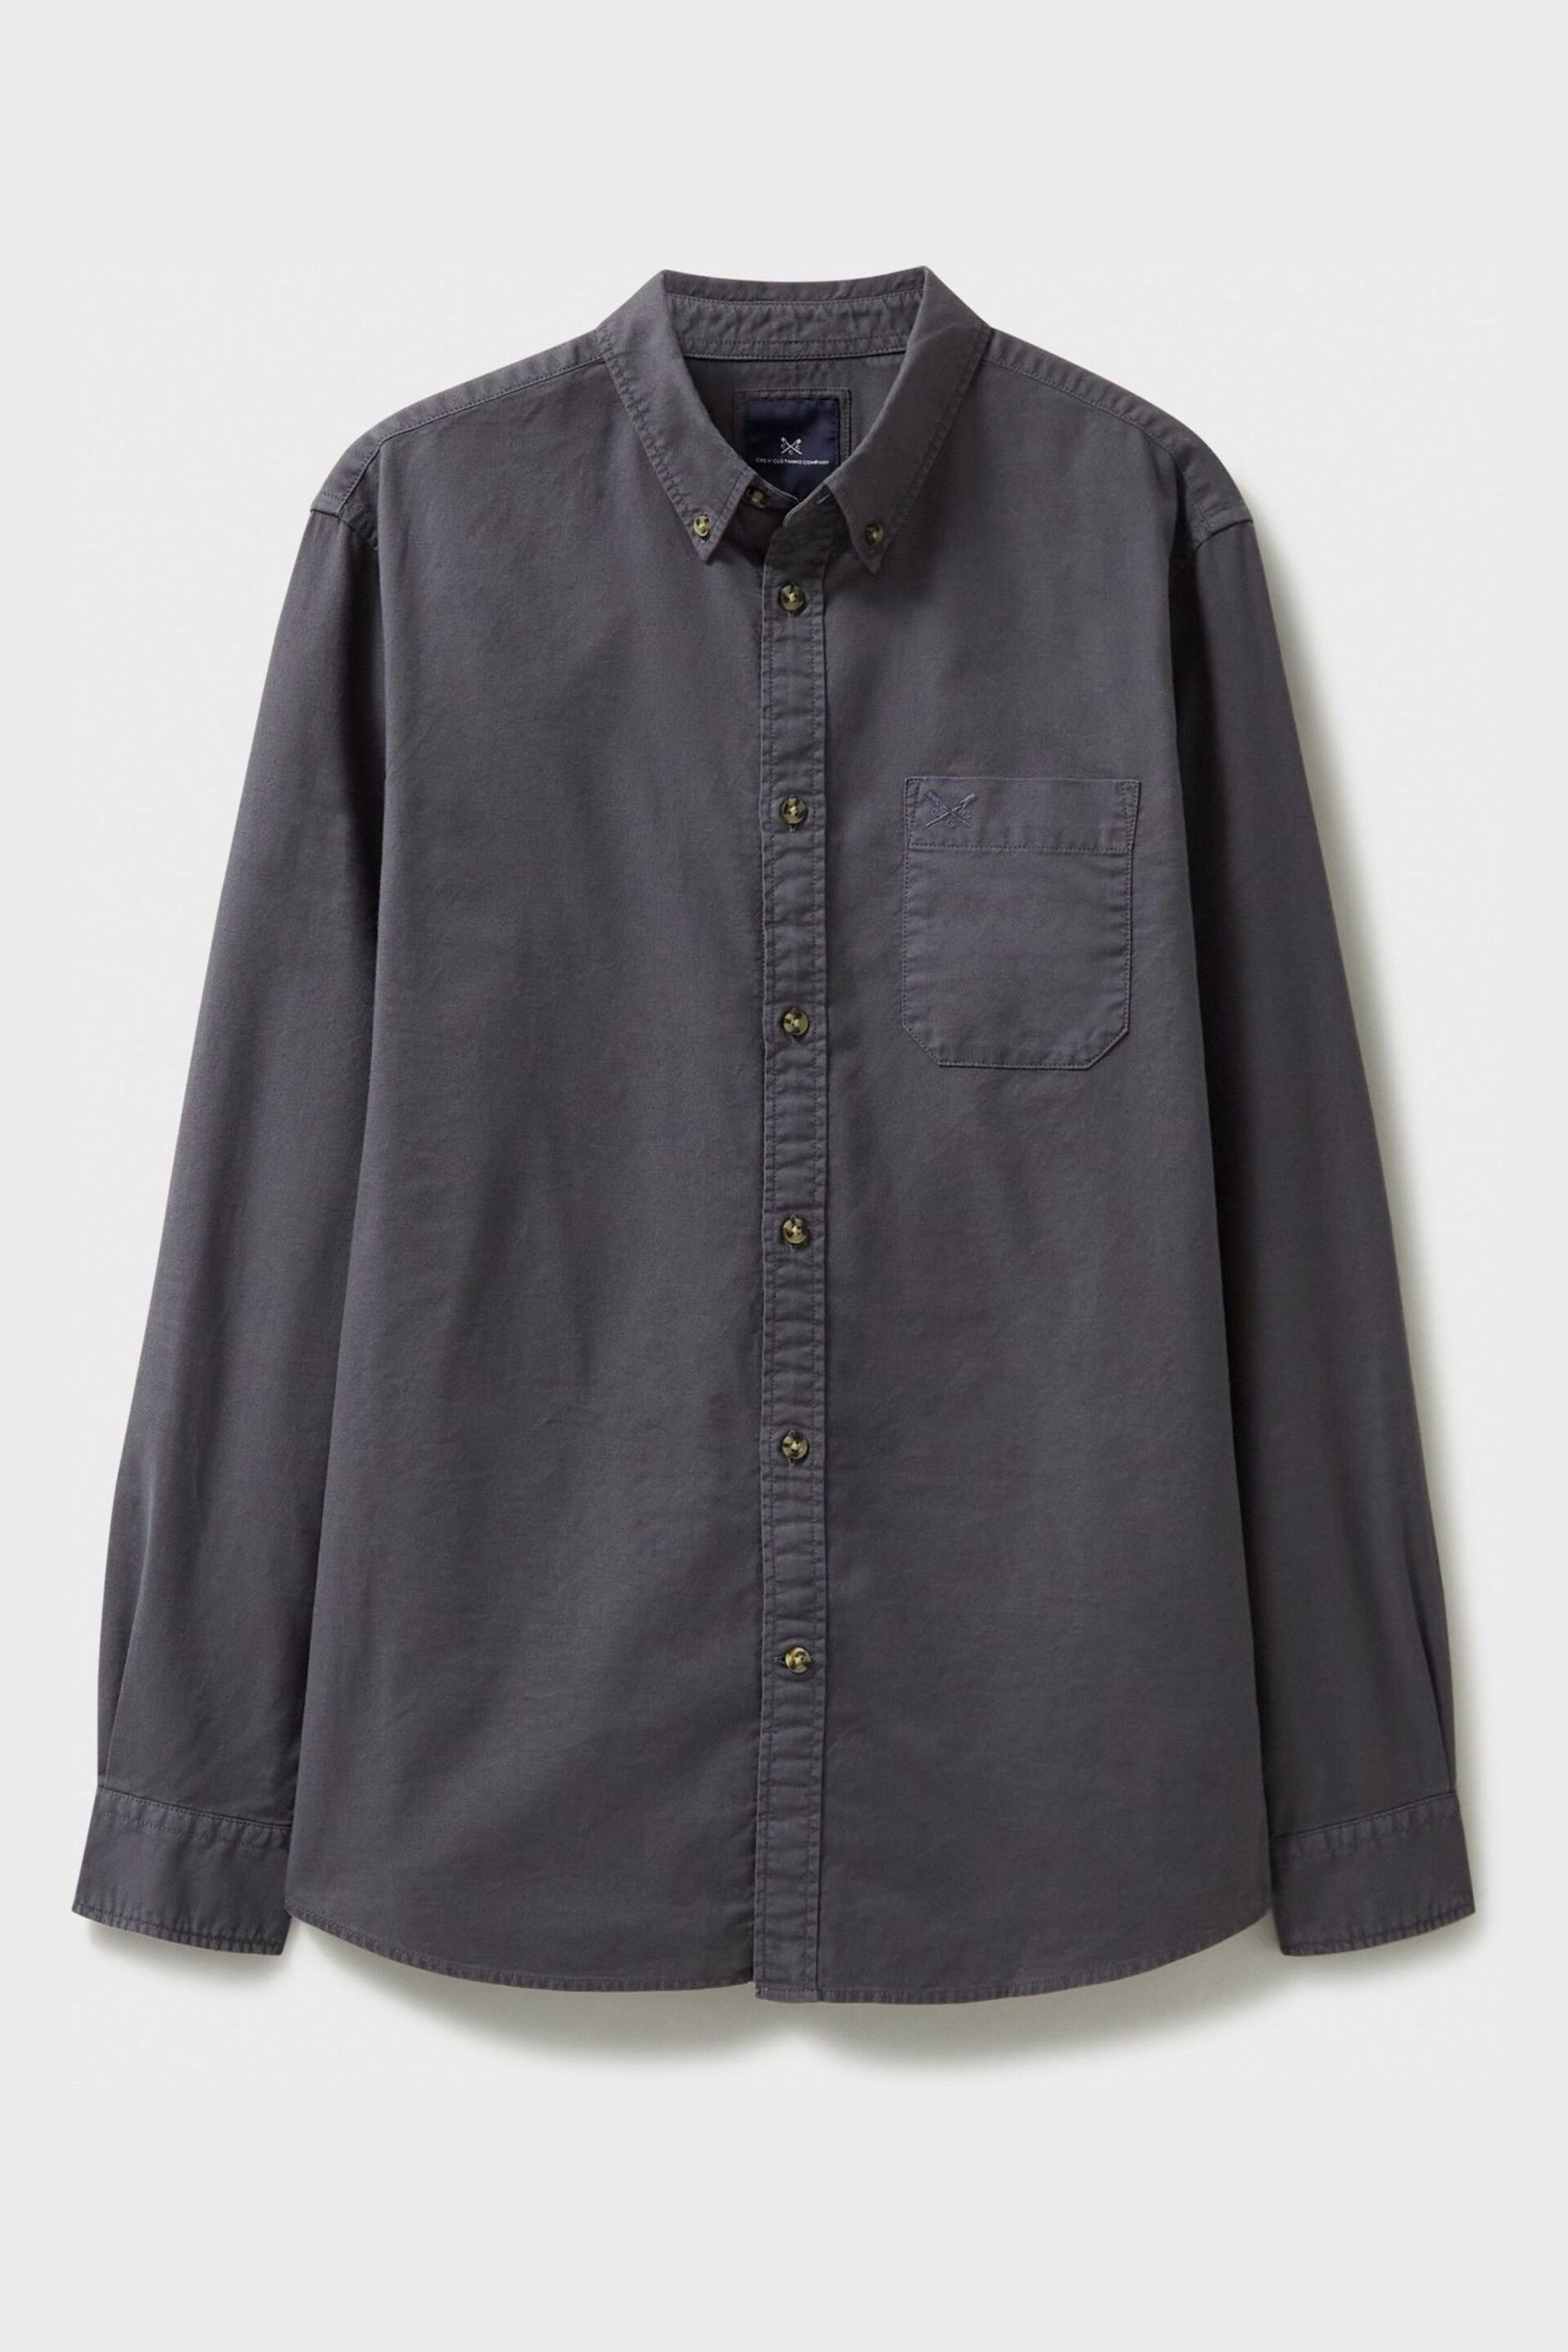 Crew Clothing Company Grey Plain Cotton Classic Shirt - Image 5 of 5